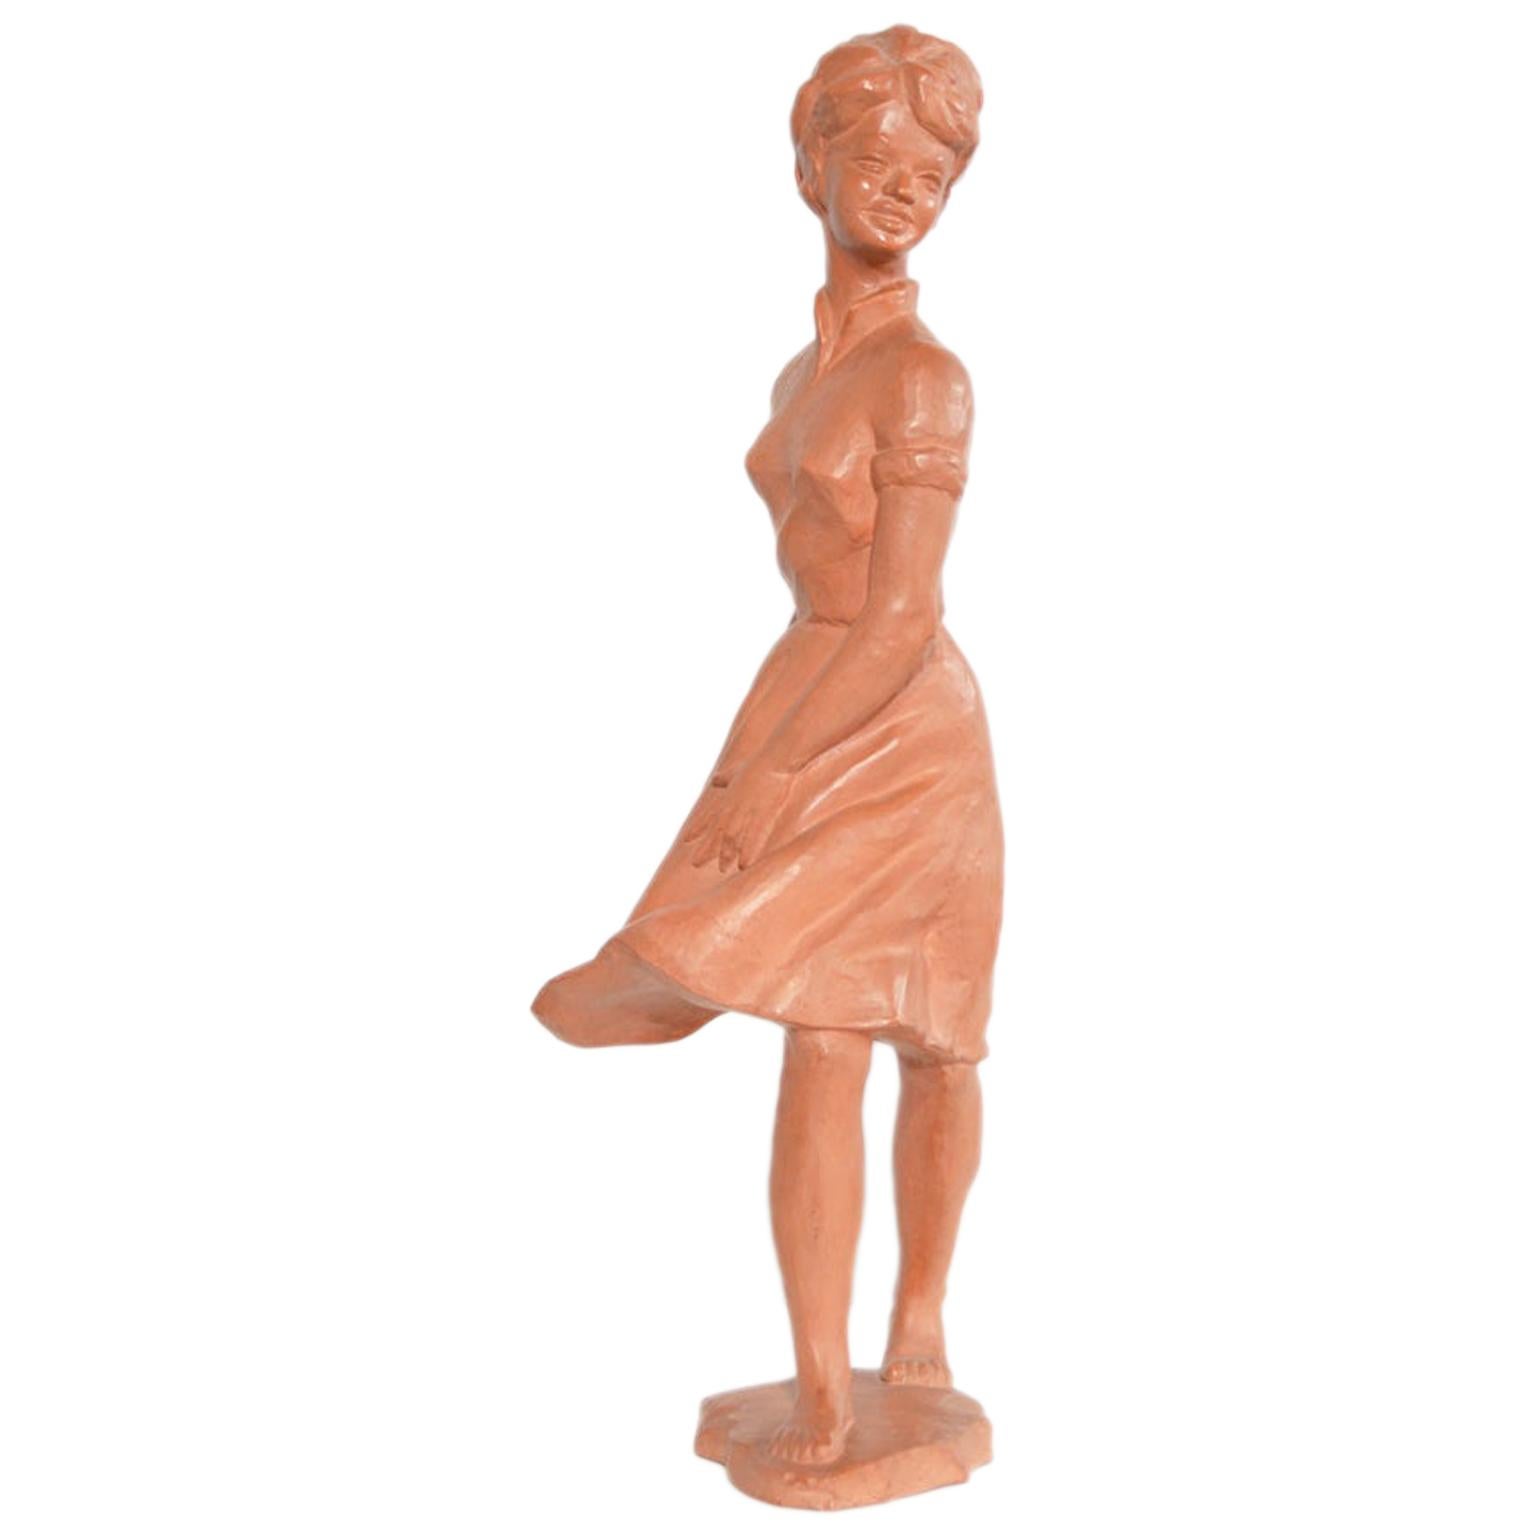 Terracotta Sculpture of a Young Lady by Belgian artist Paul Sersté